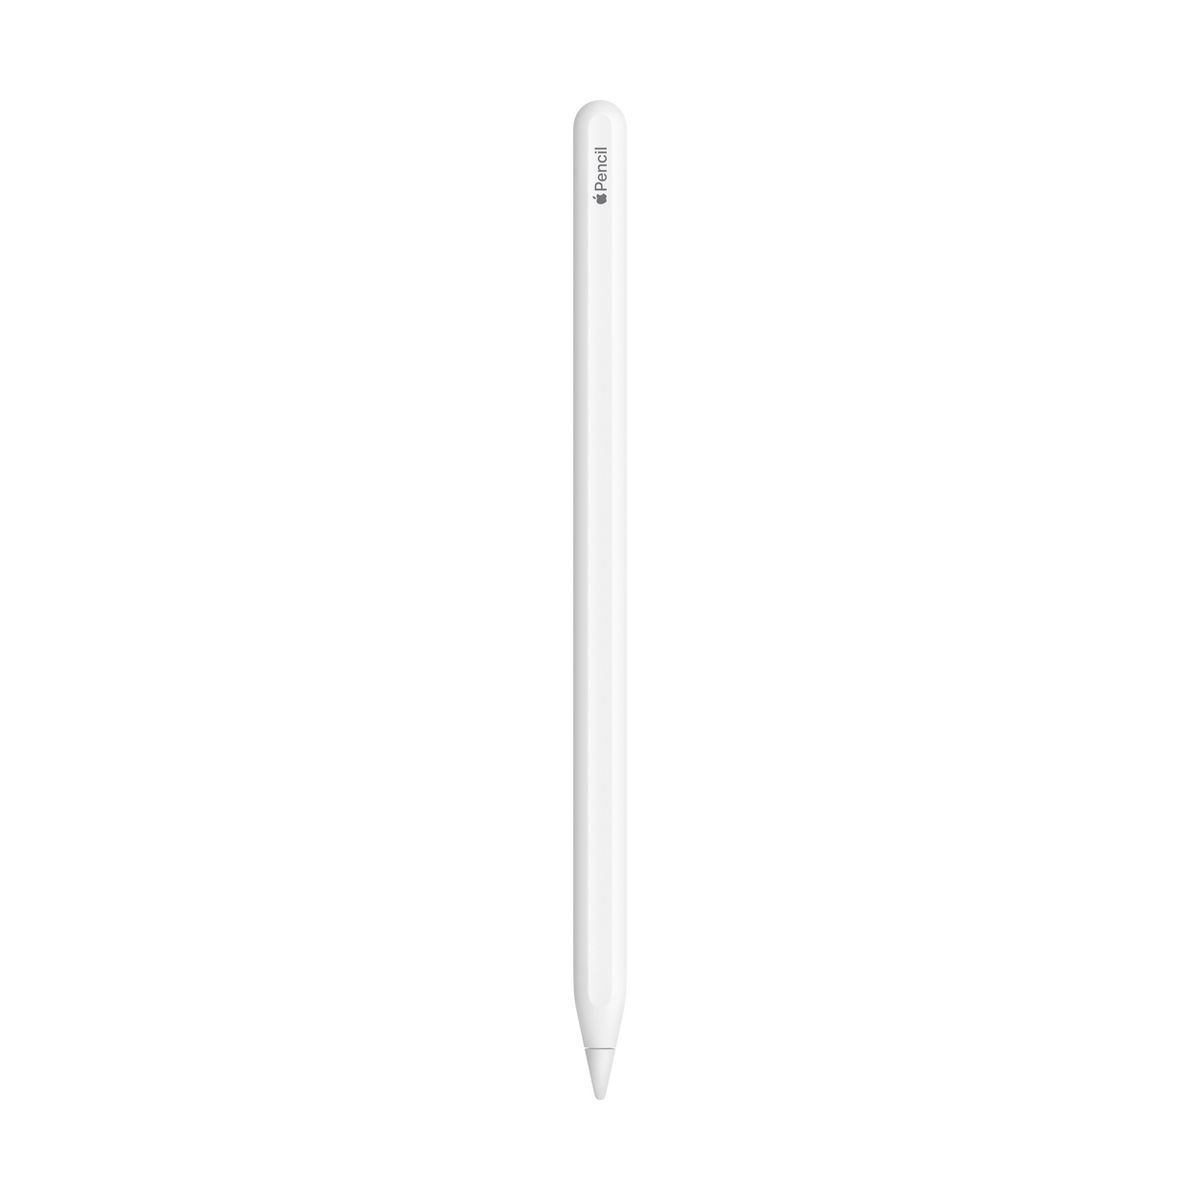 Apple Pencil 2nd Generation | Target